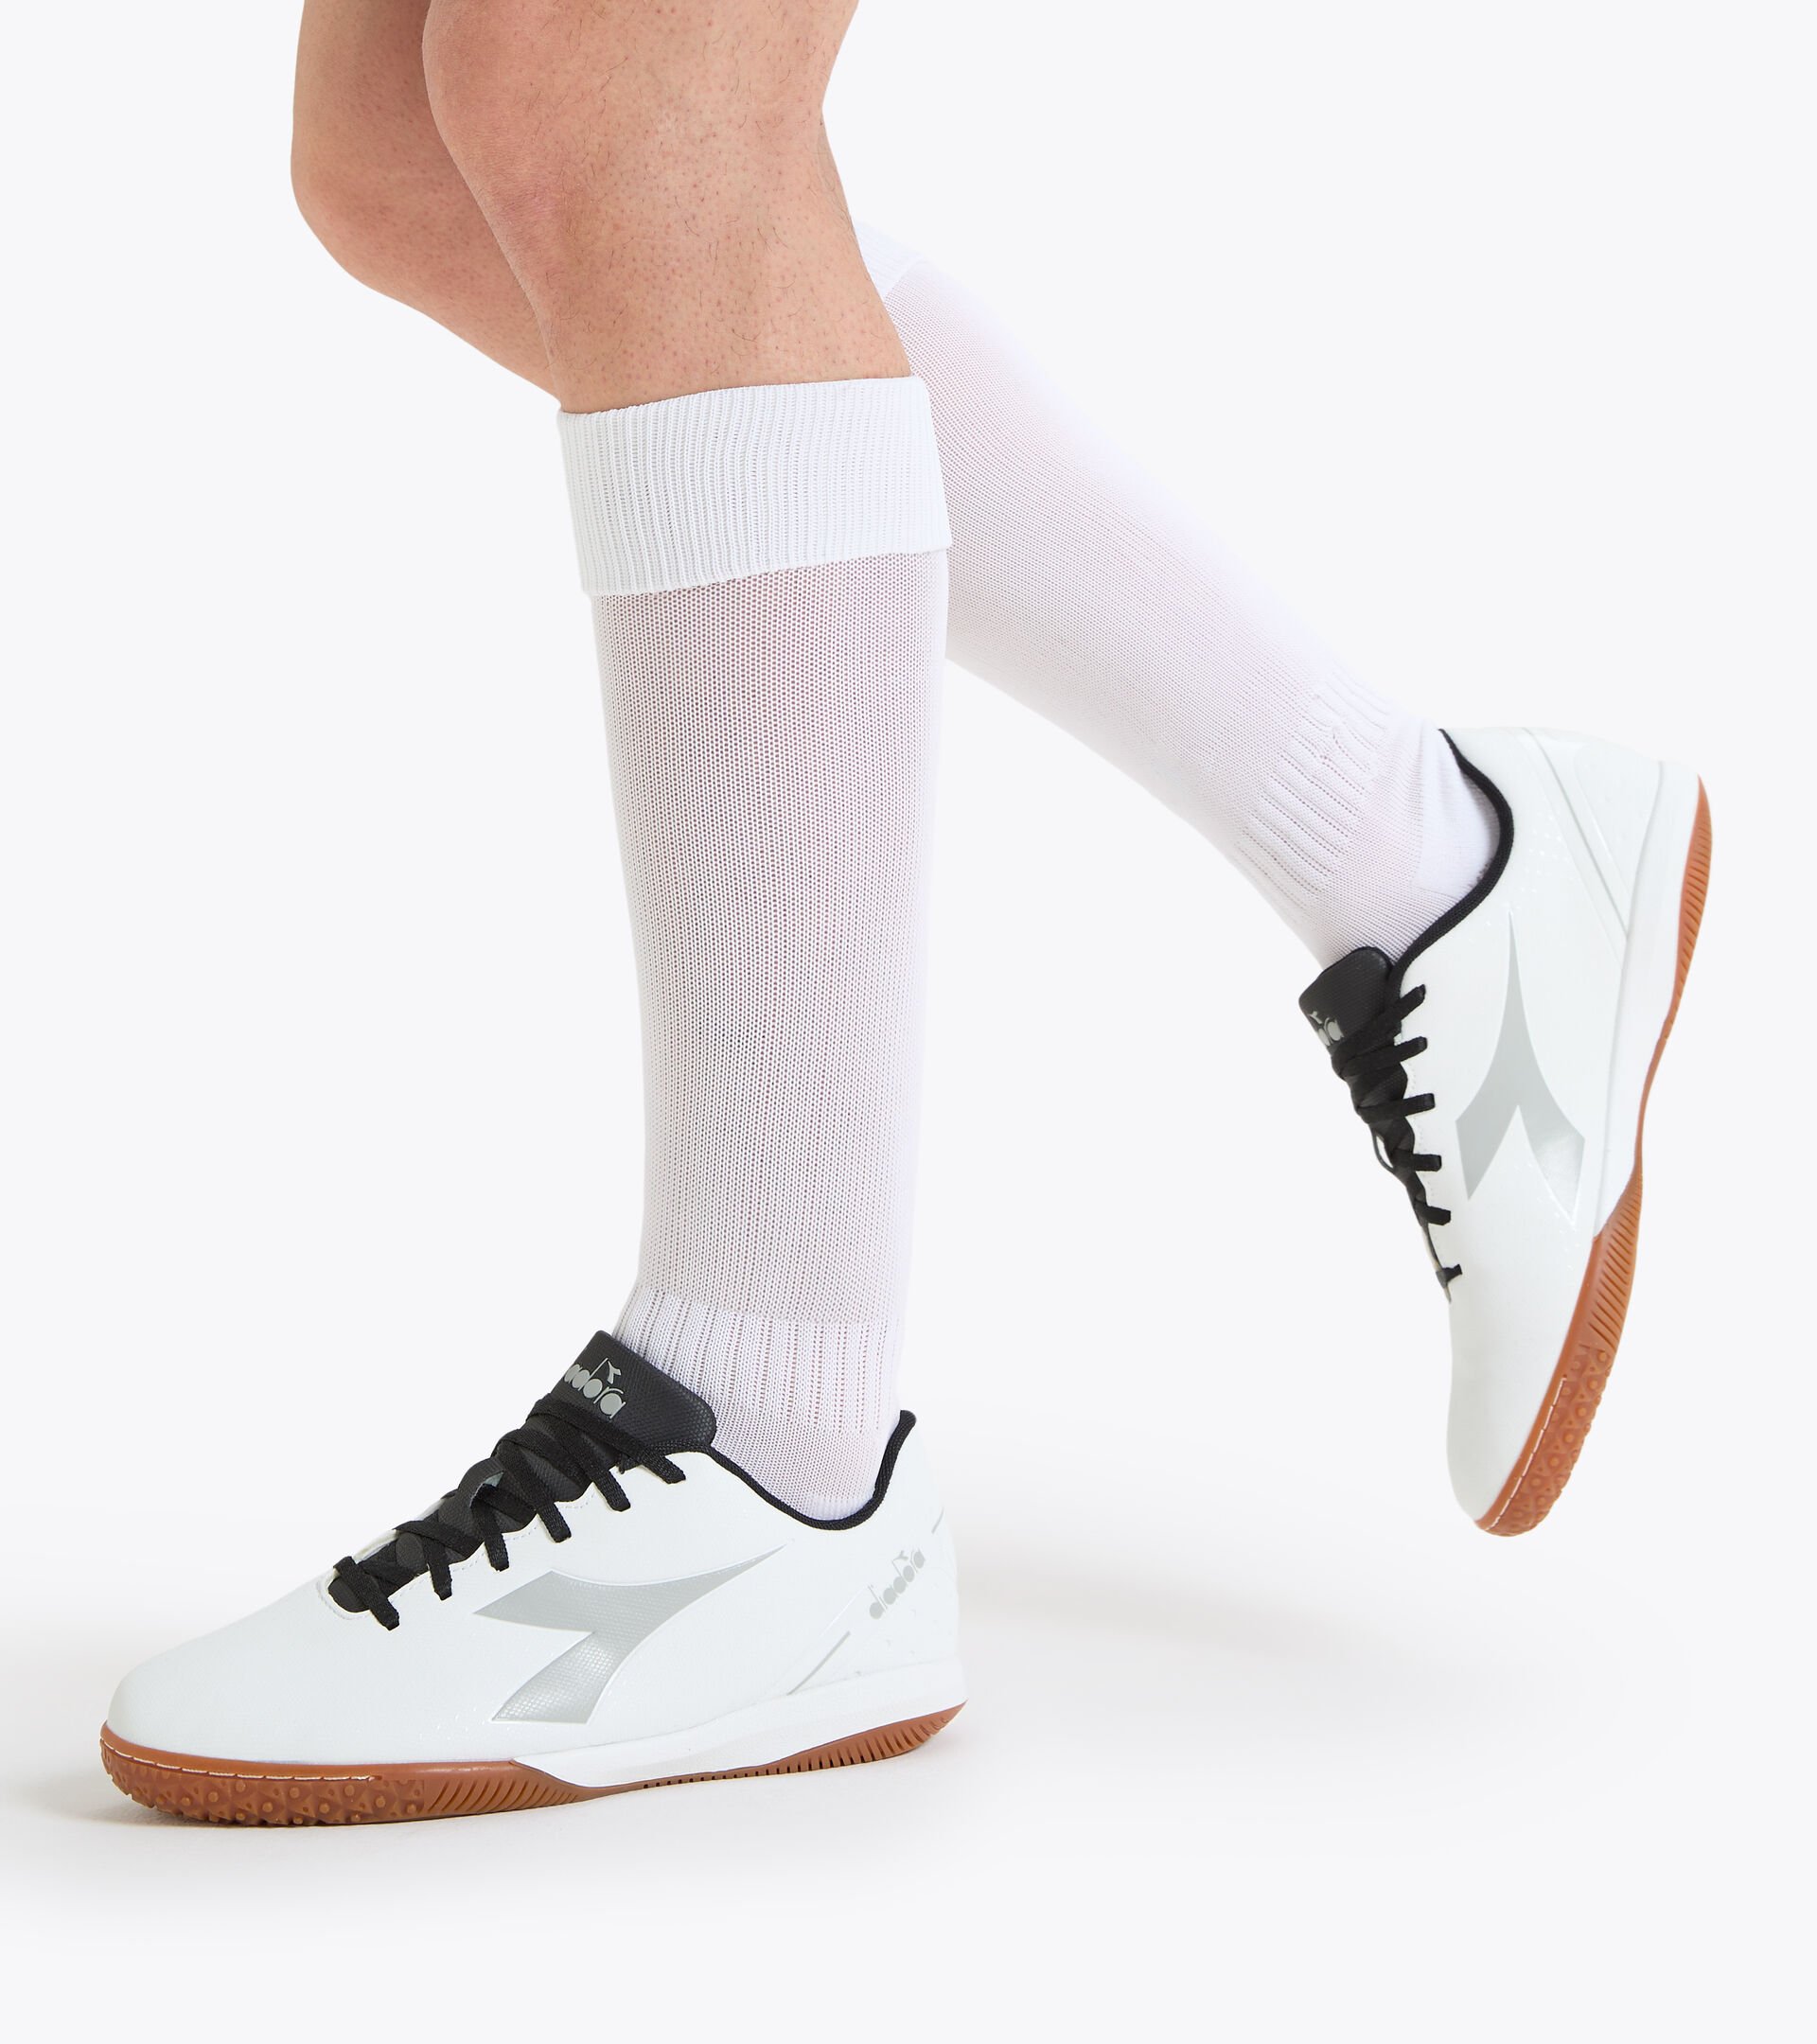 Chaussures de football - Homme PICHICHI 5 IDR BLANC/GRIS COOL GRAY/NOIR - Diadora